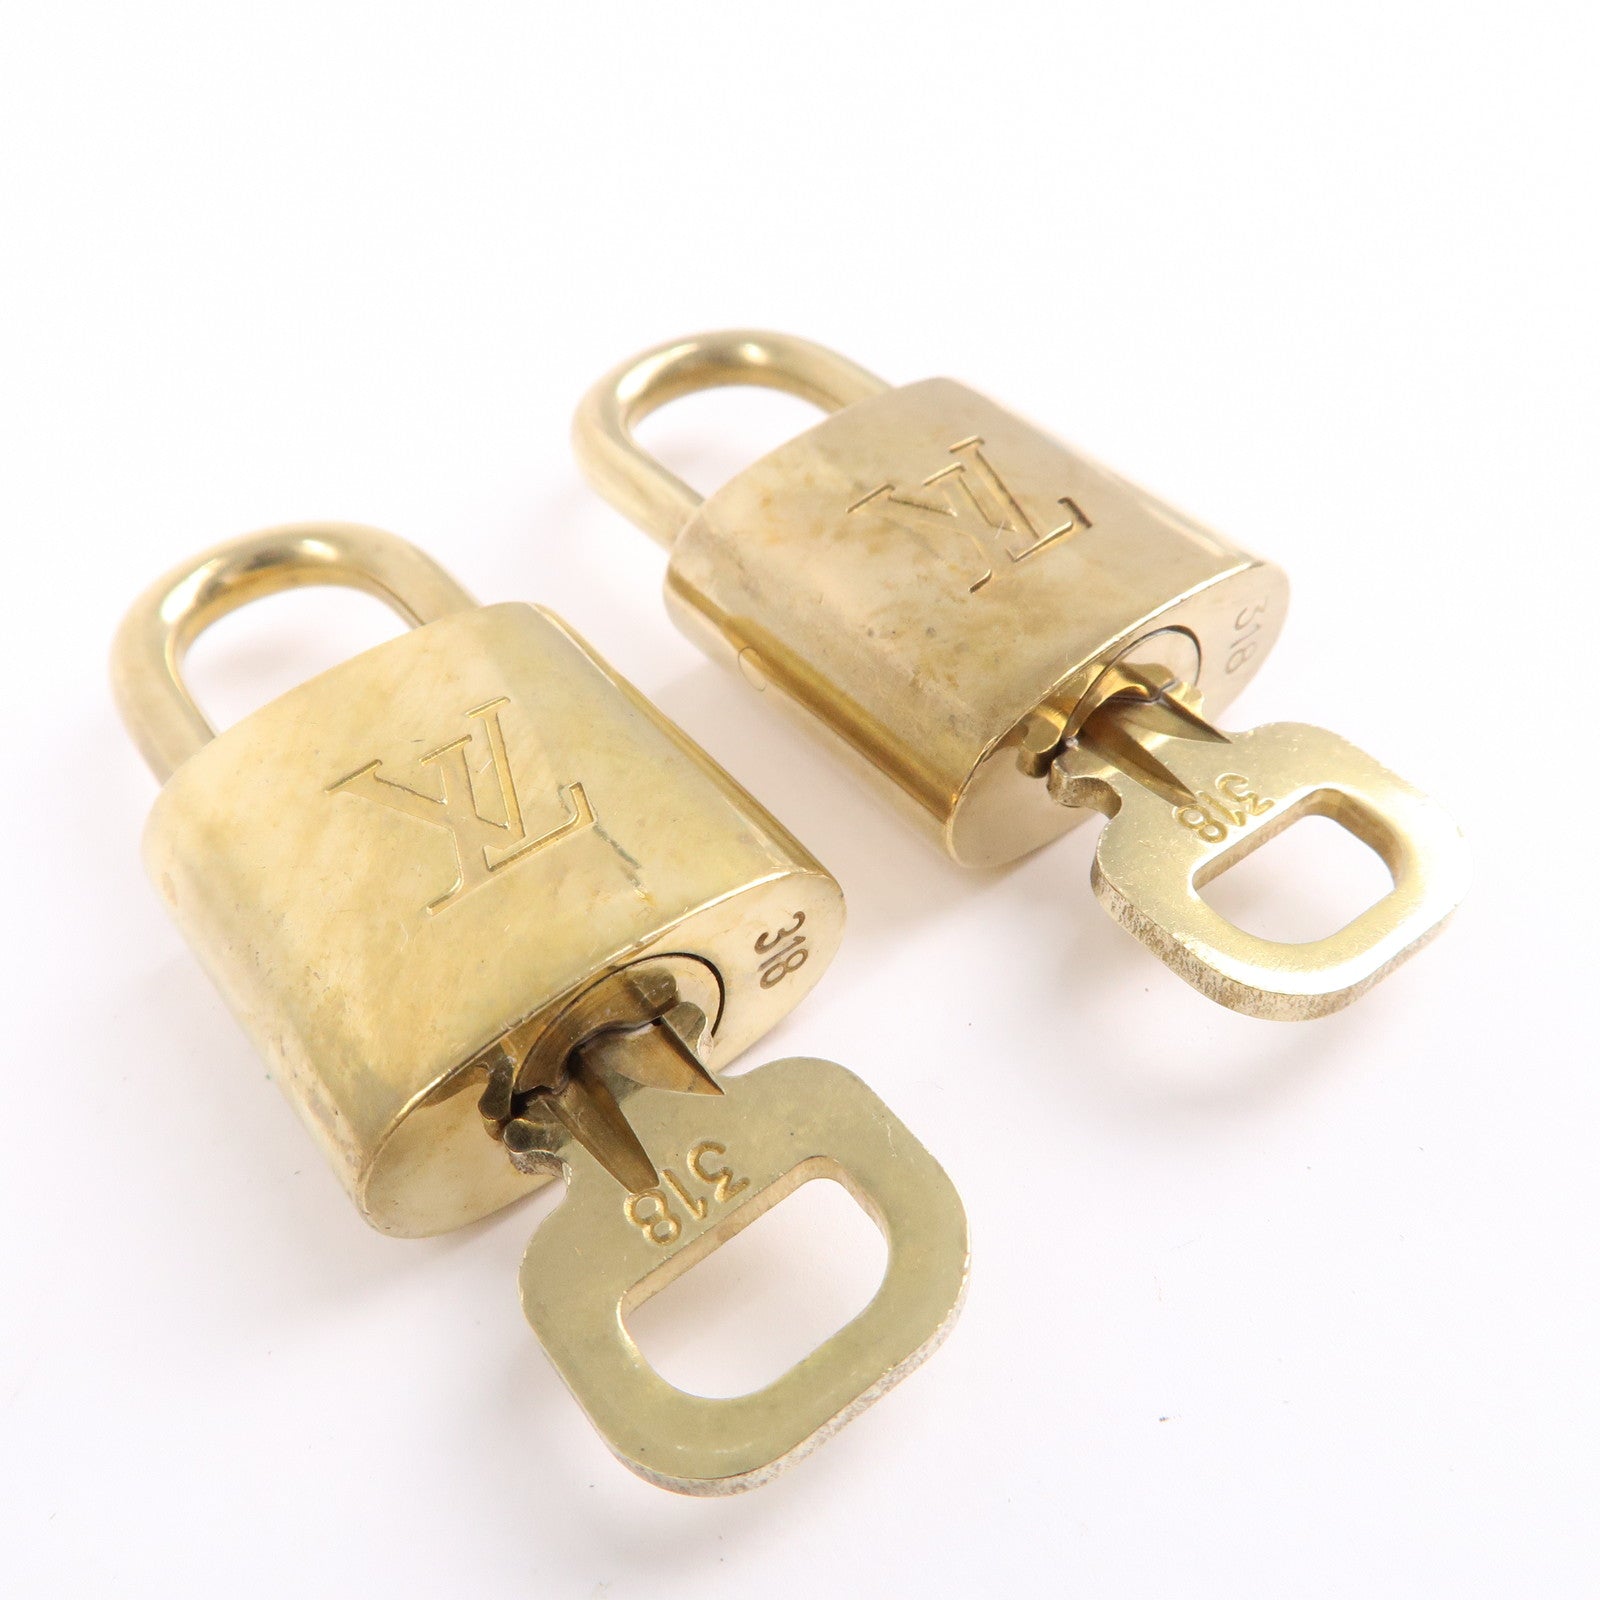 padlock key 318